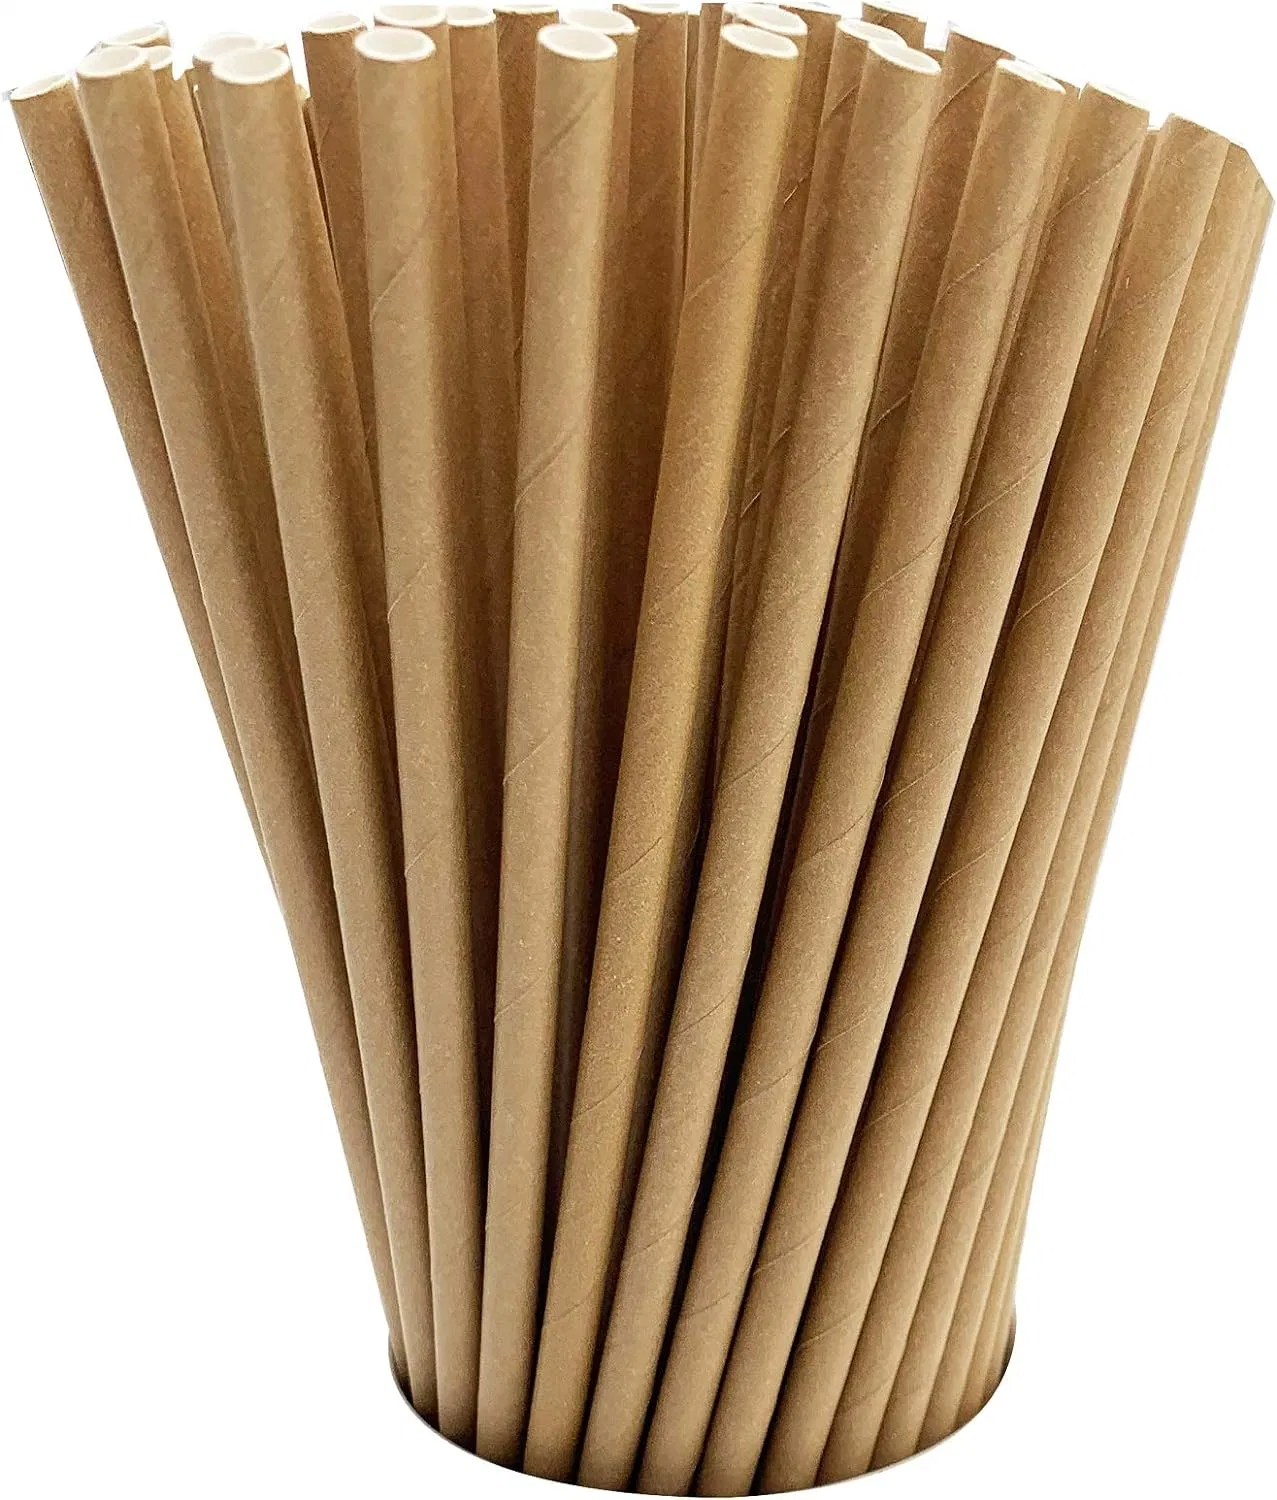 Wholesale Disposable Biodegradable Kraft Paper Drinking Straws